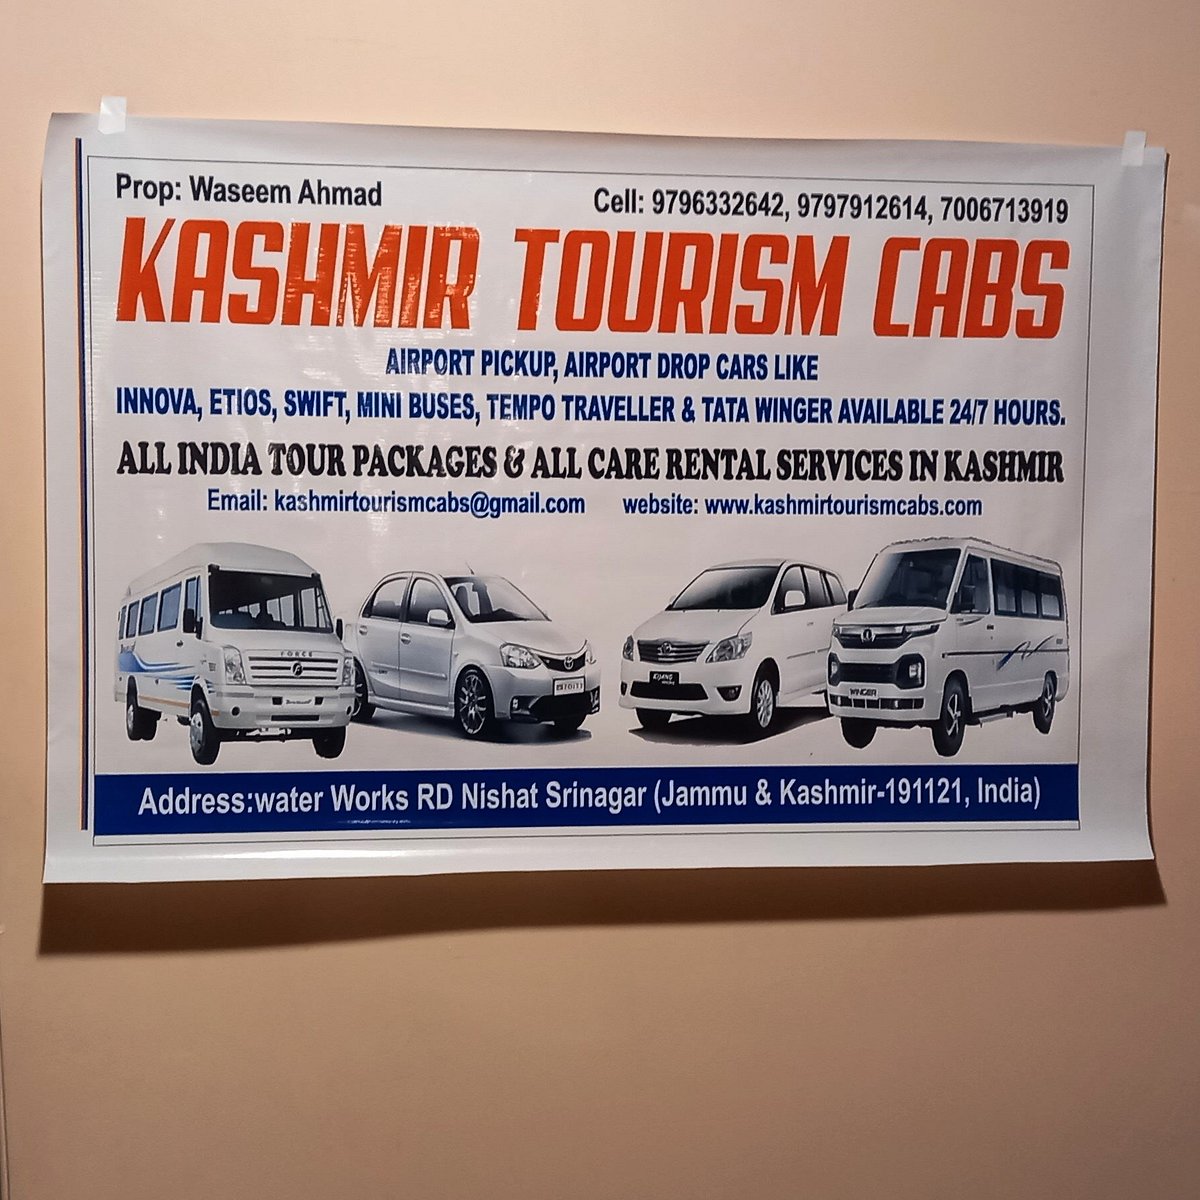 Kashmir Tourism Cabs (Srinagar) - All You Need to Know BEFORE You Go